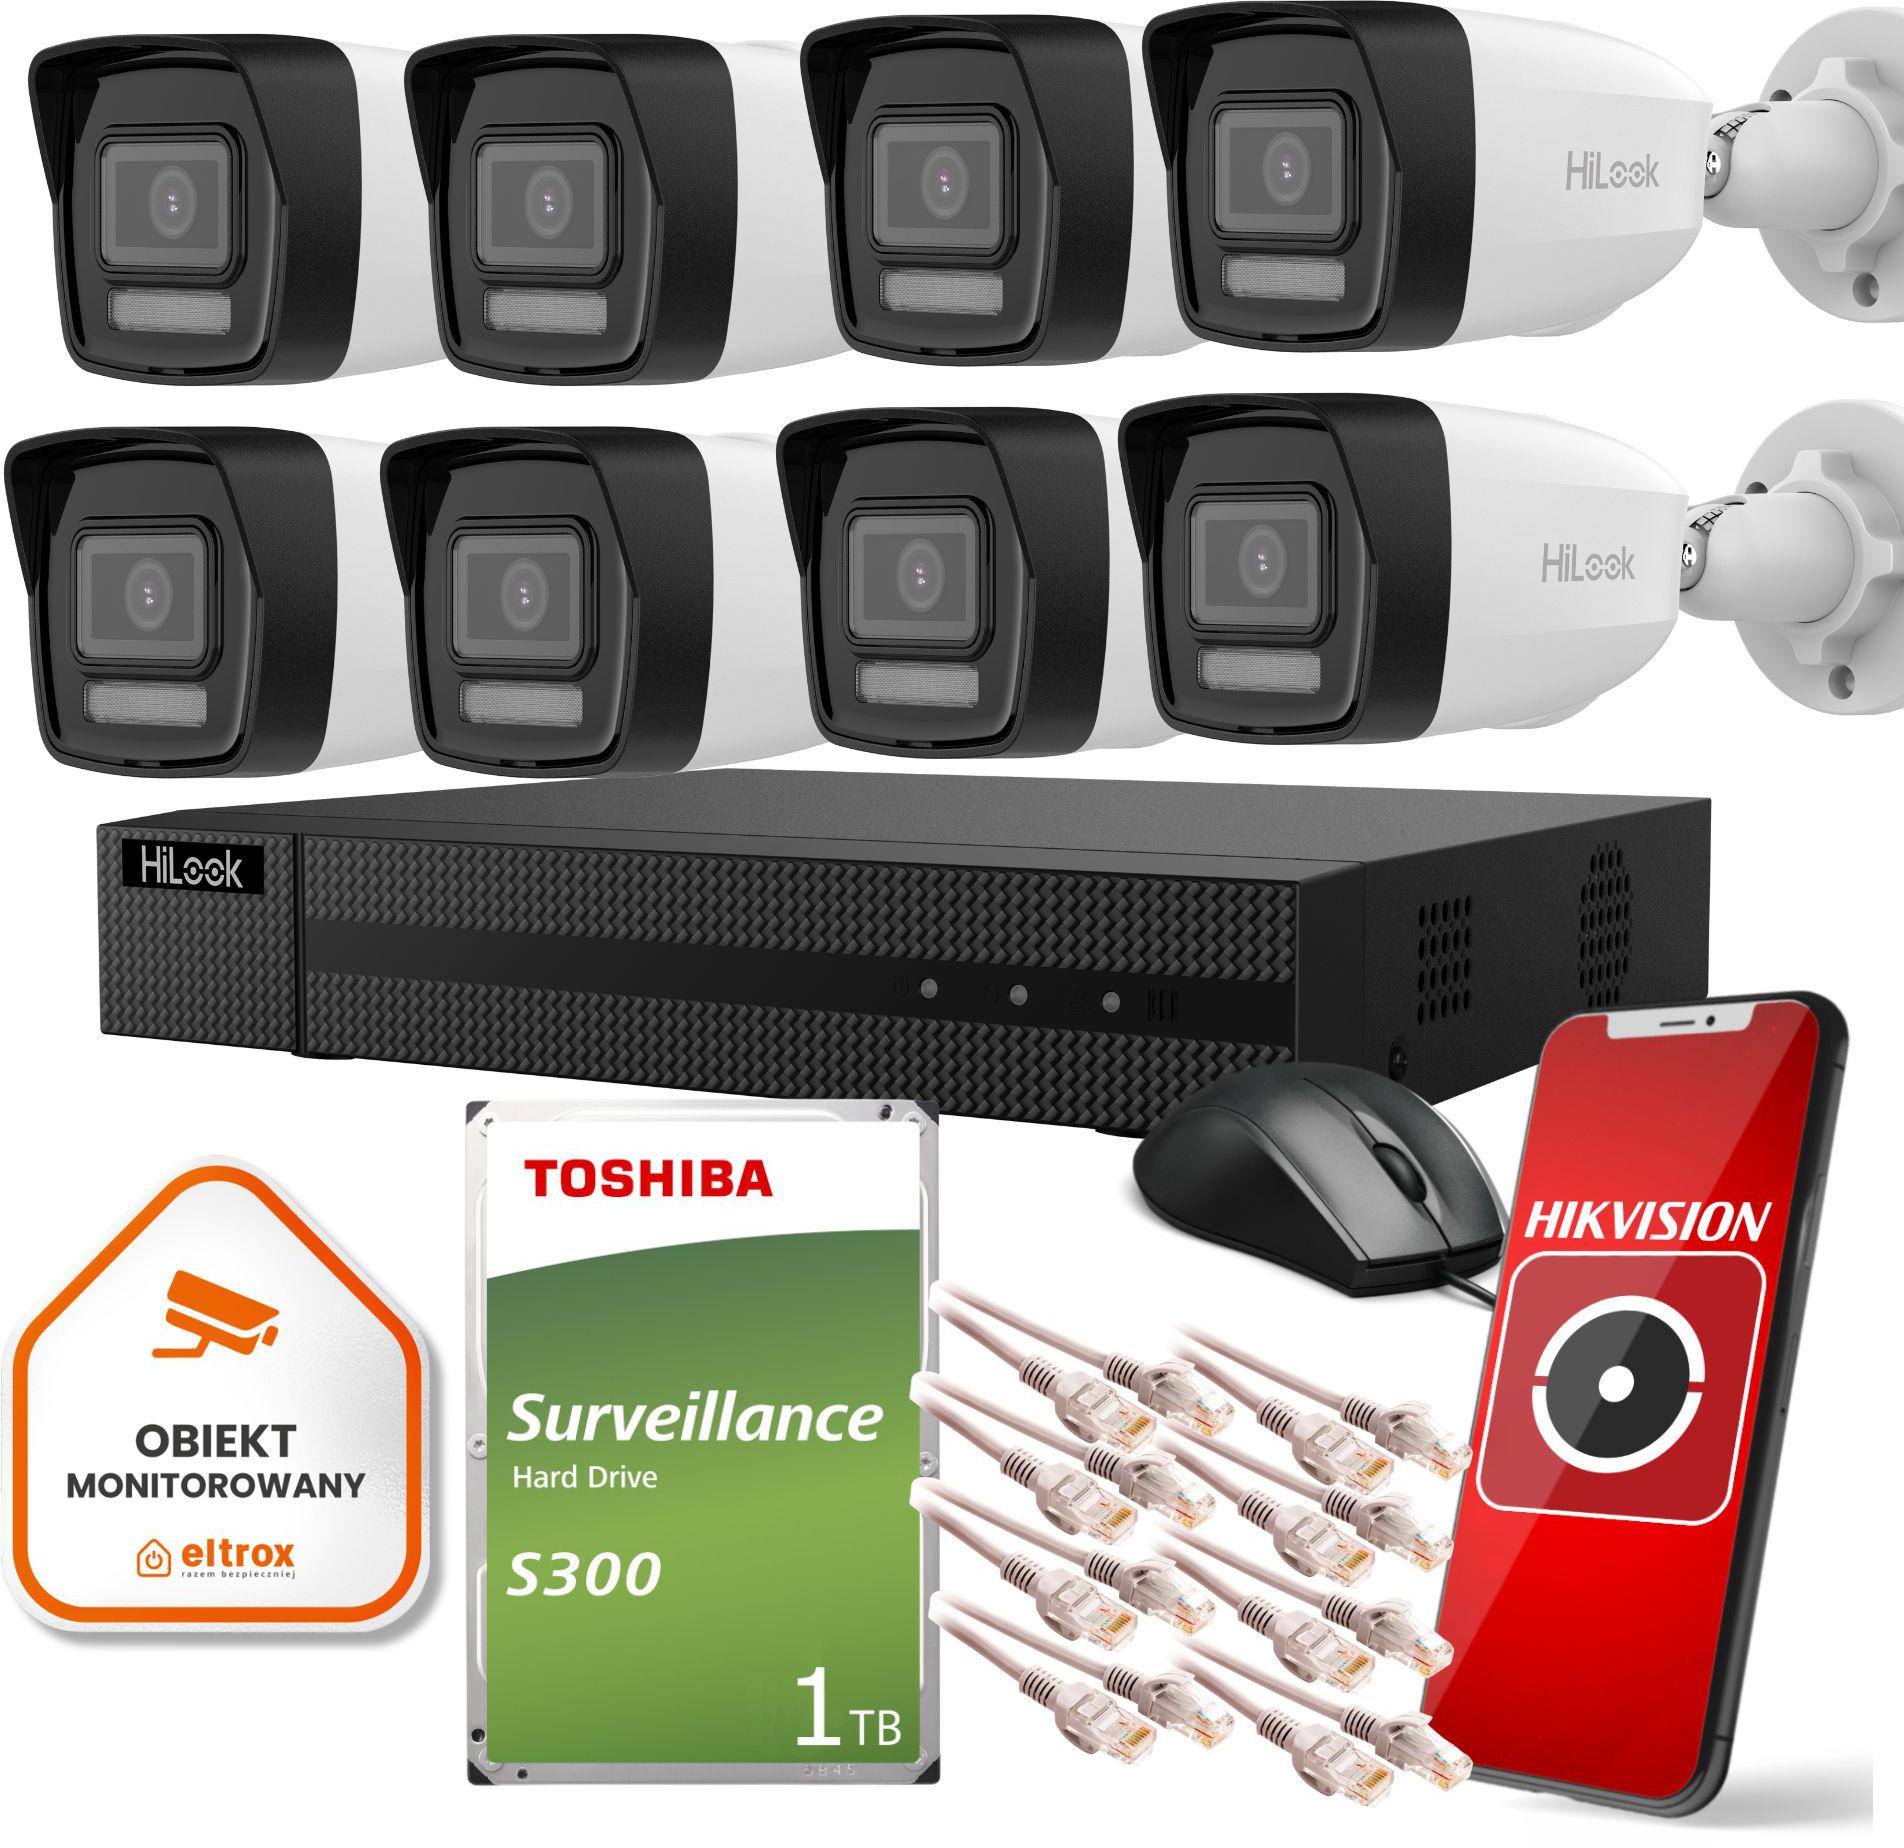 Kompletny zestaw monitoringu Hilook by Hikvision 8 kamer IP, rejestratorem i dyskiem do Twojego domu